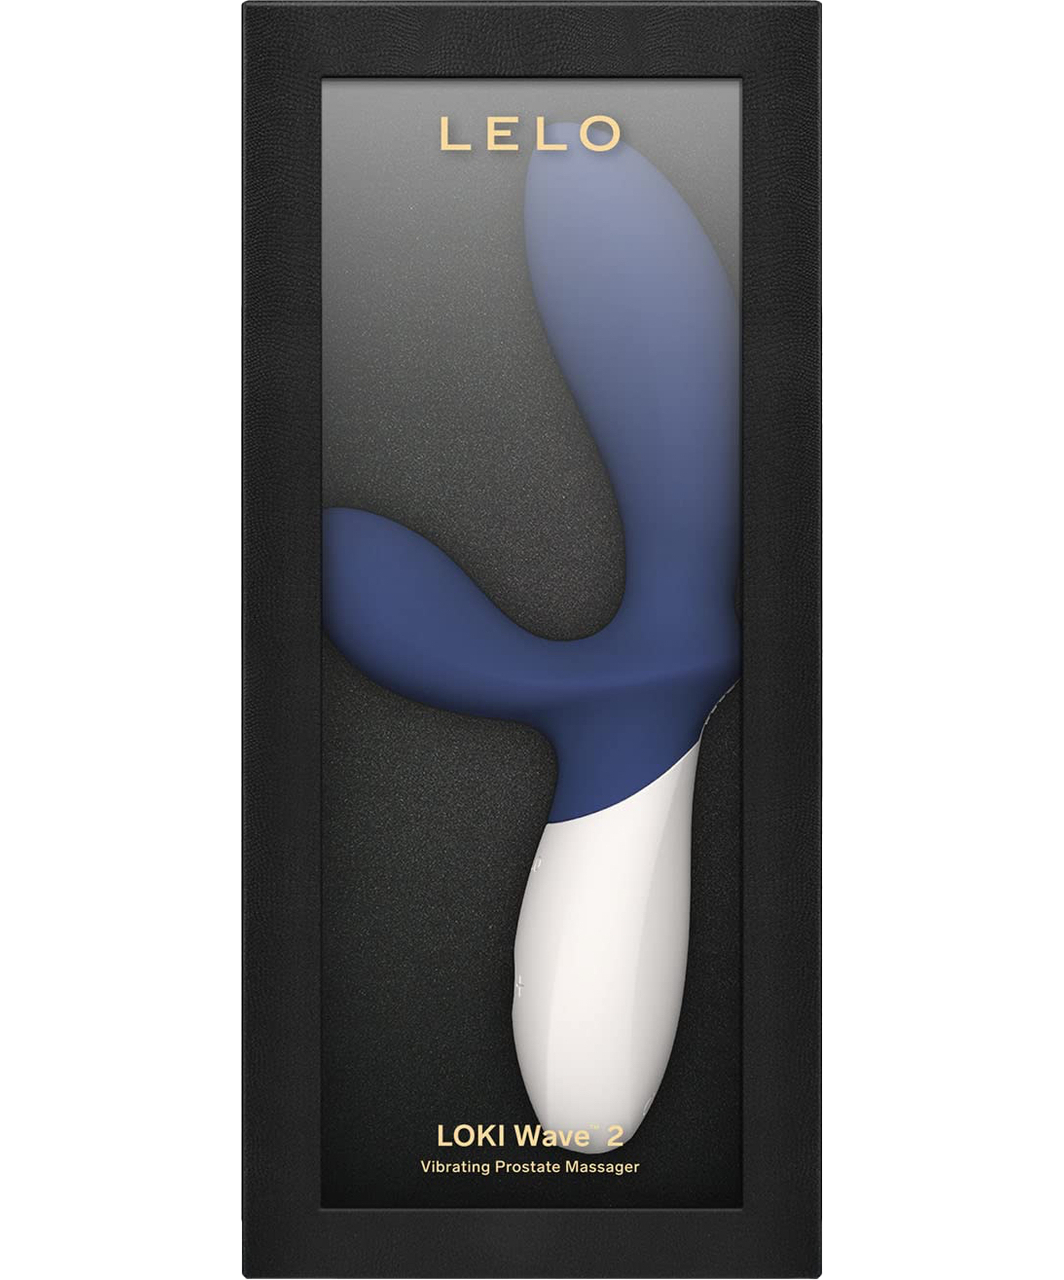 LELO Loki Wave 2 prostatos stimuliatorius